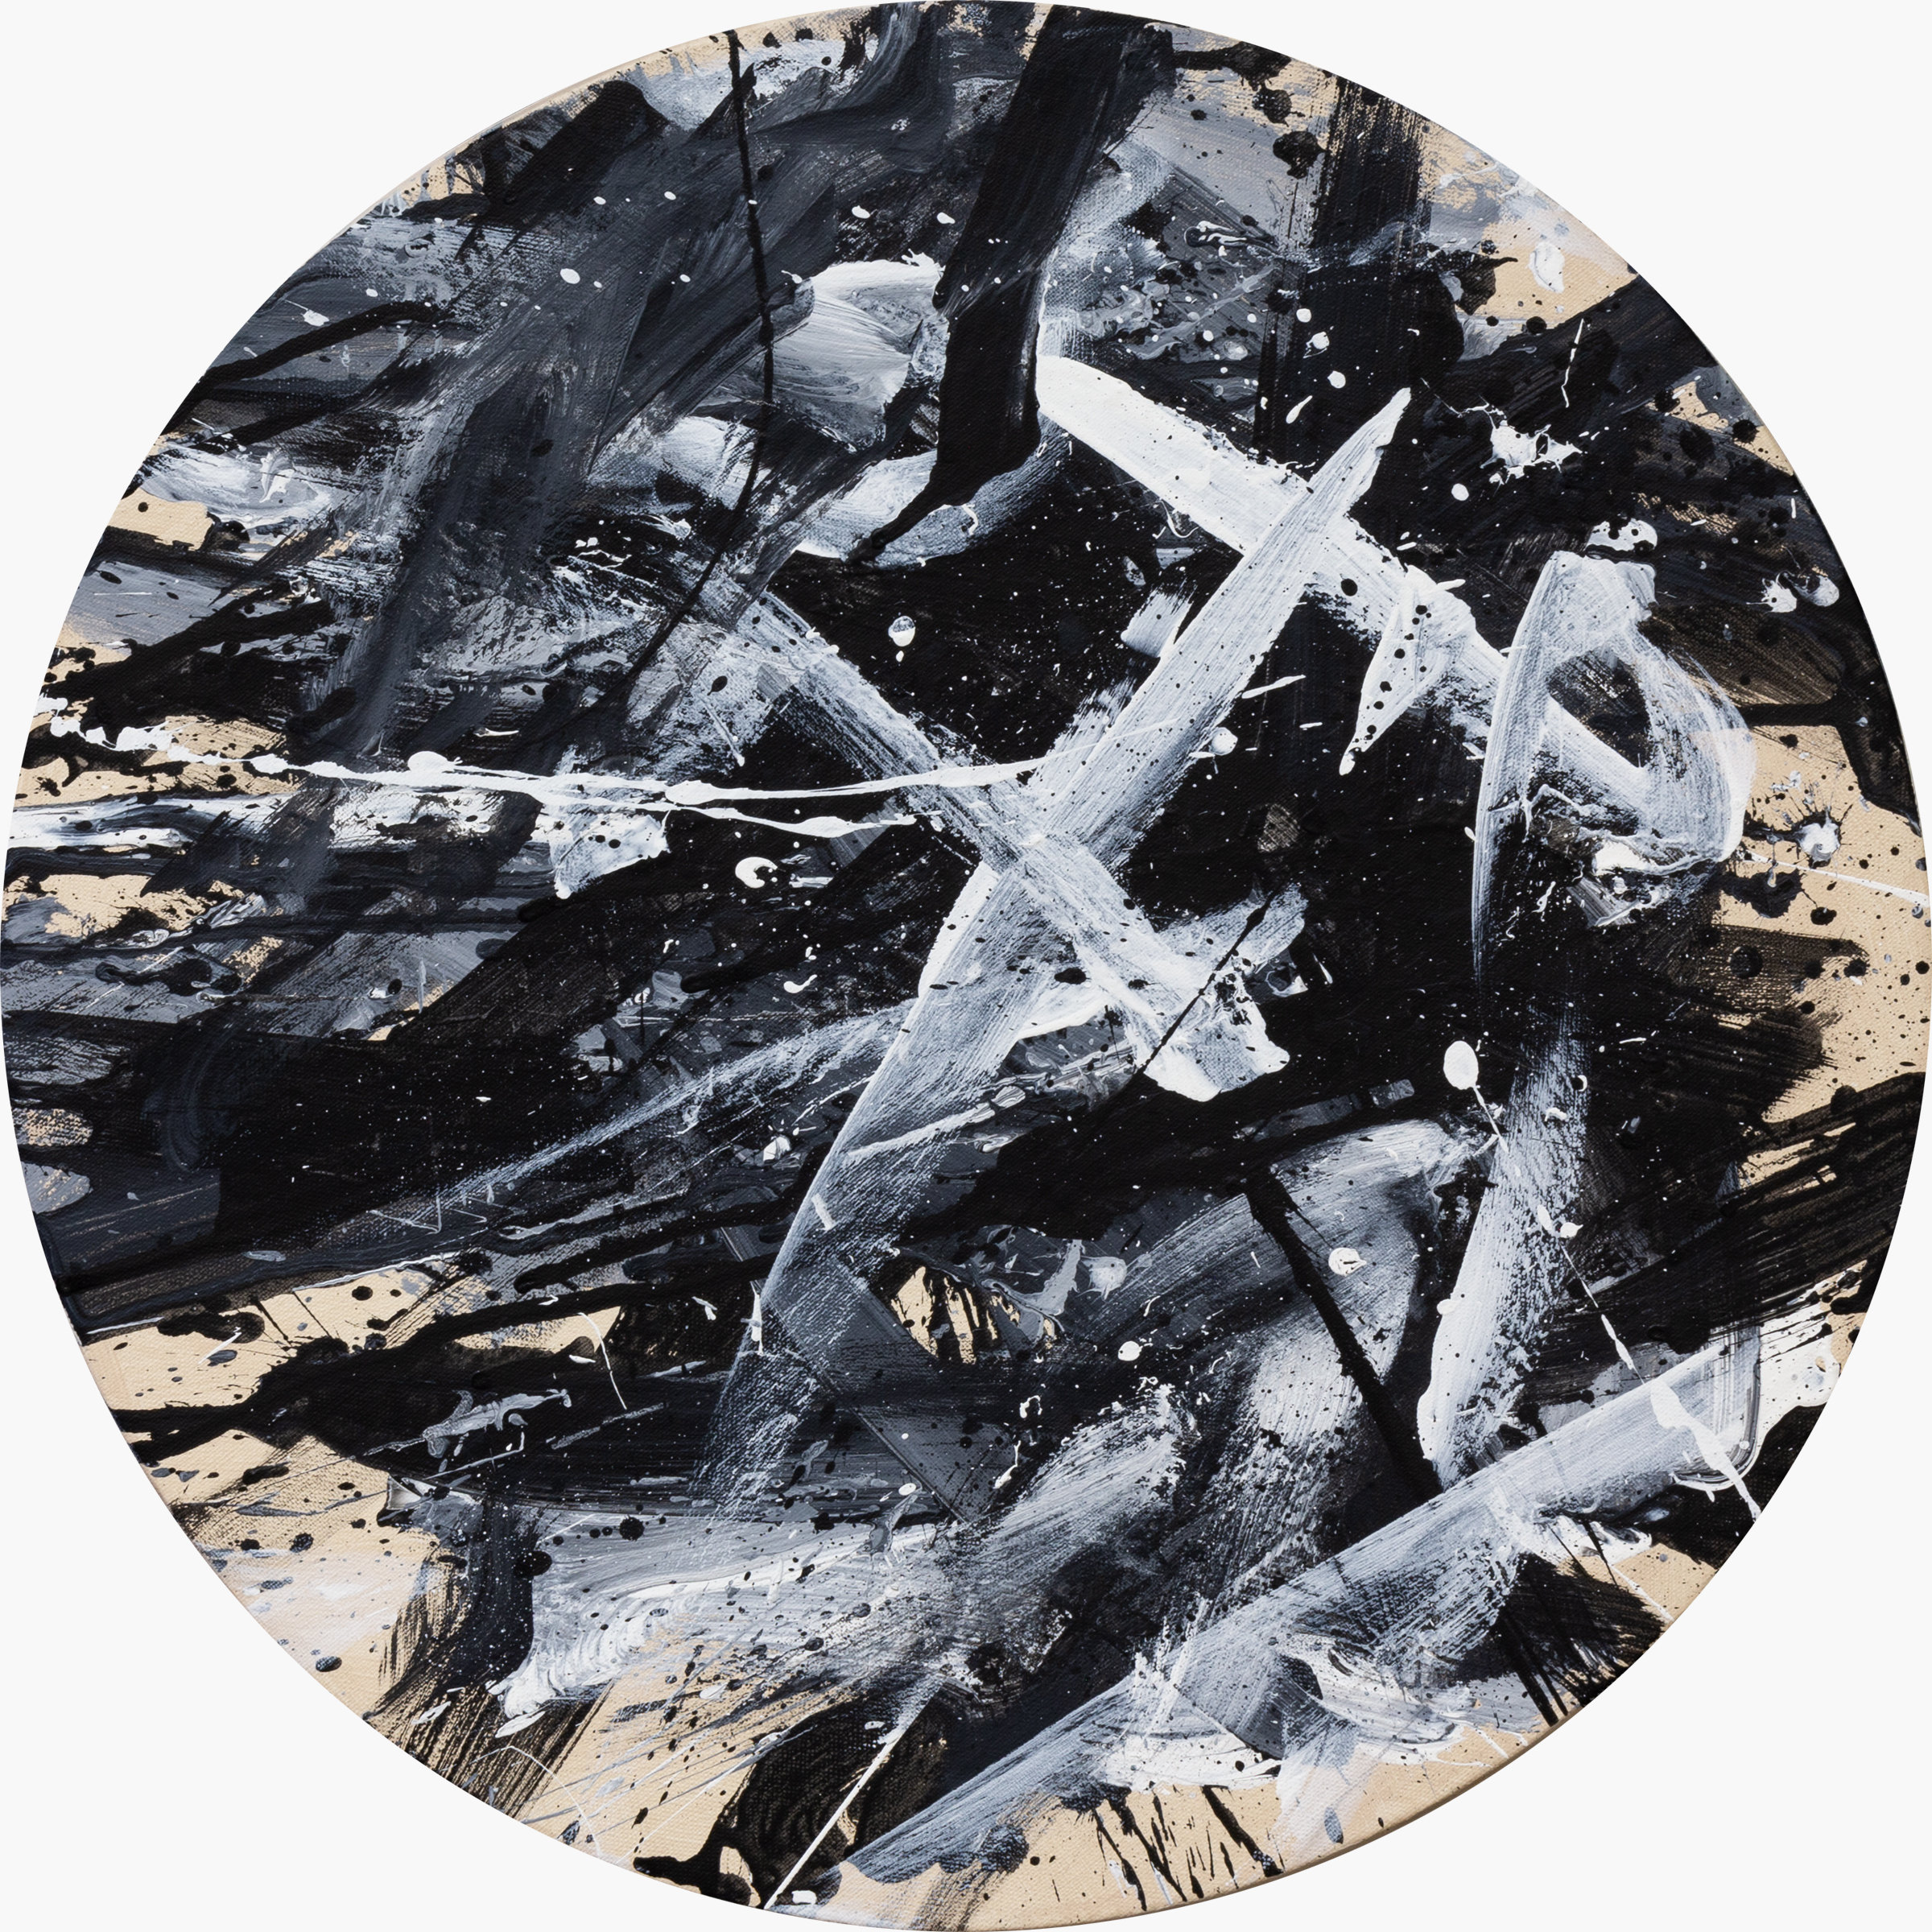 Tondo black and white n. 5, 2023 | Acrylic on canvas, diameter 40 cm